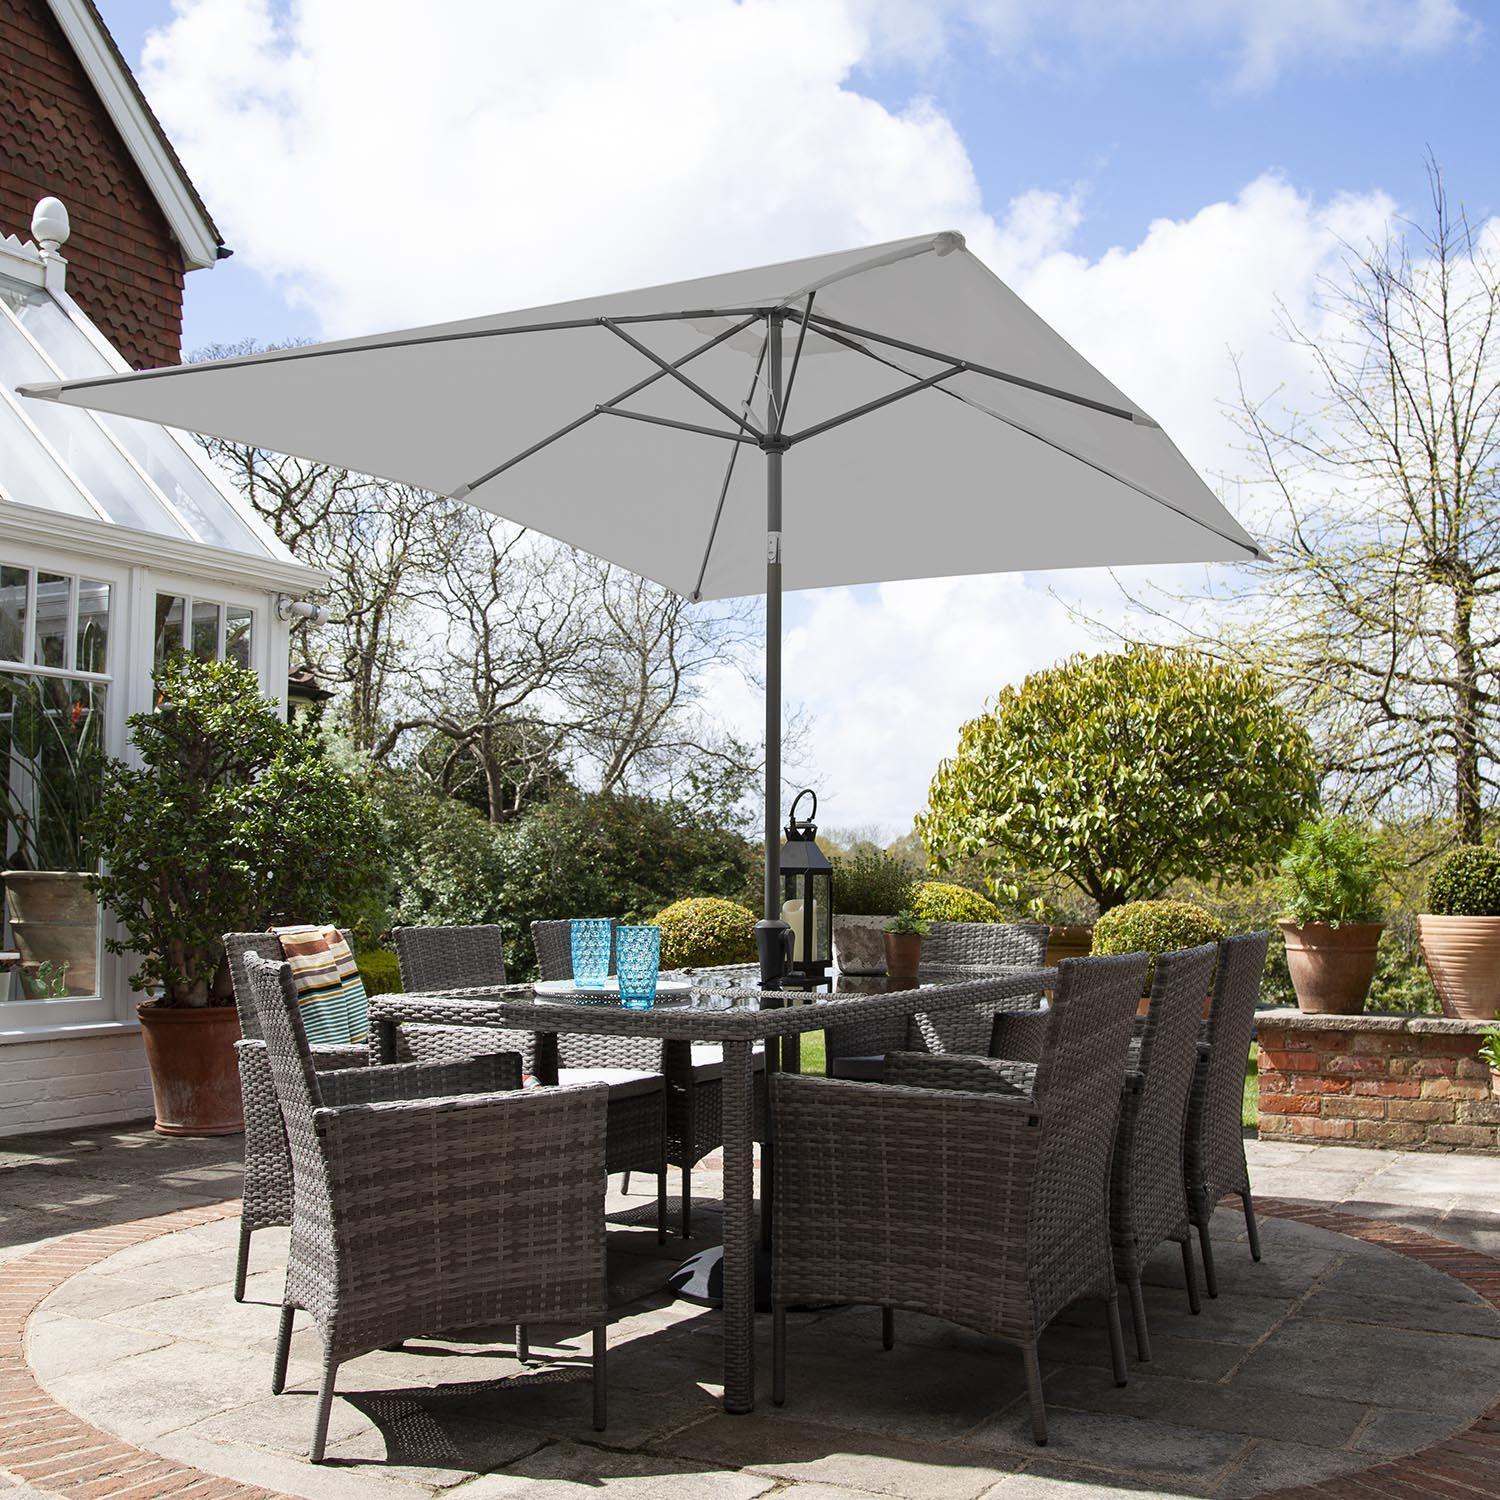 Marston 8 Seater Rattan Outdoor Dining Set with Grey Parasol - Rattan Garden Furniture - Grey - Glass Top - Laura James